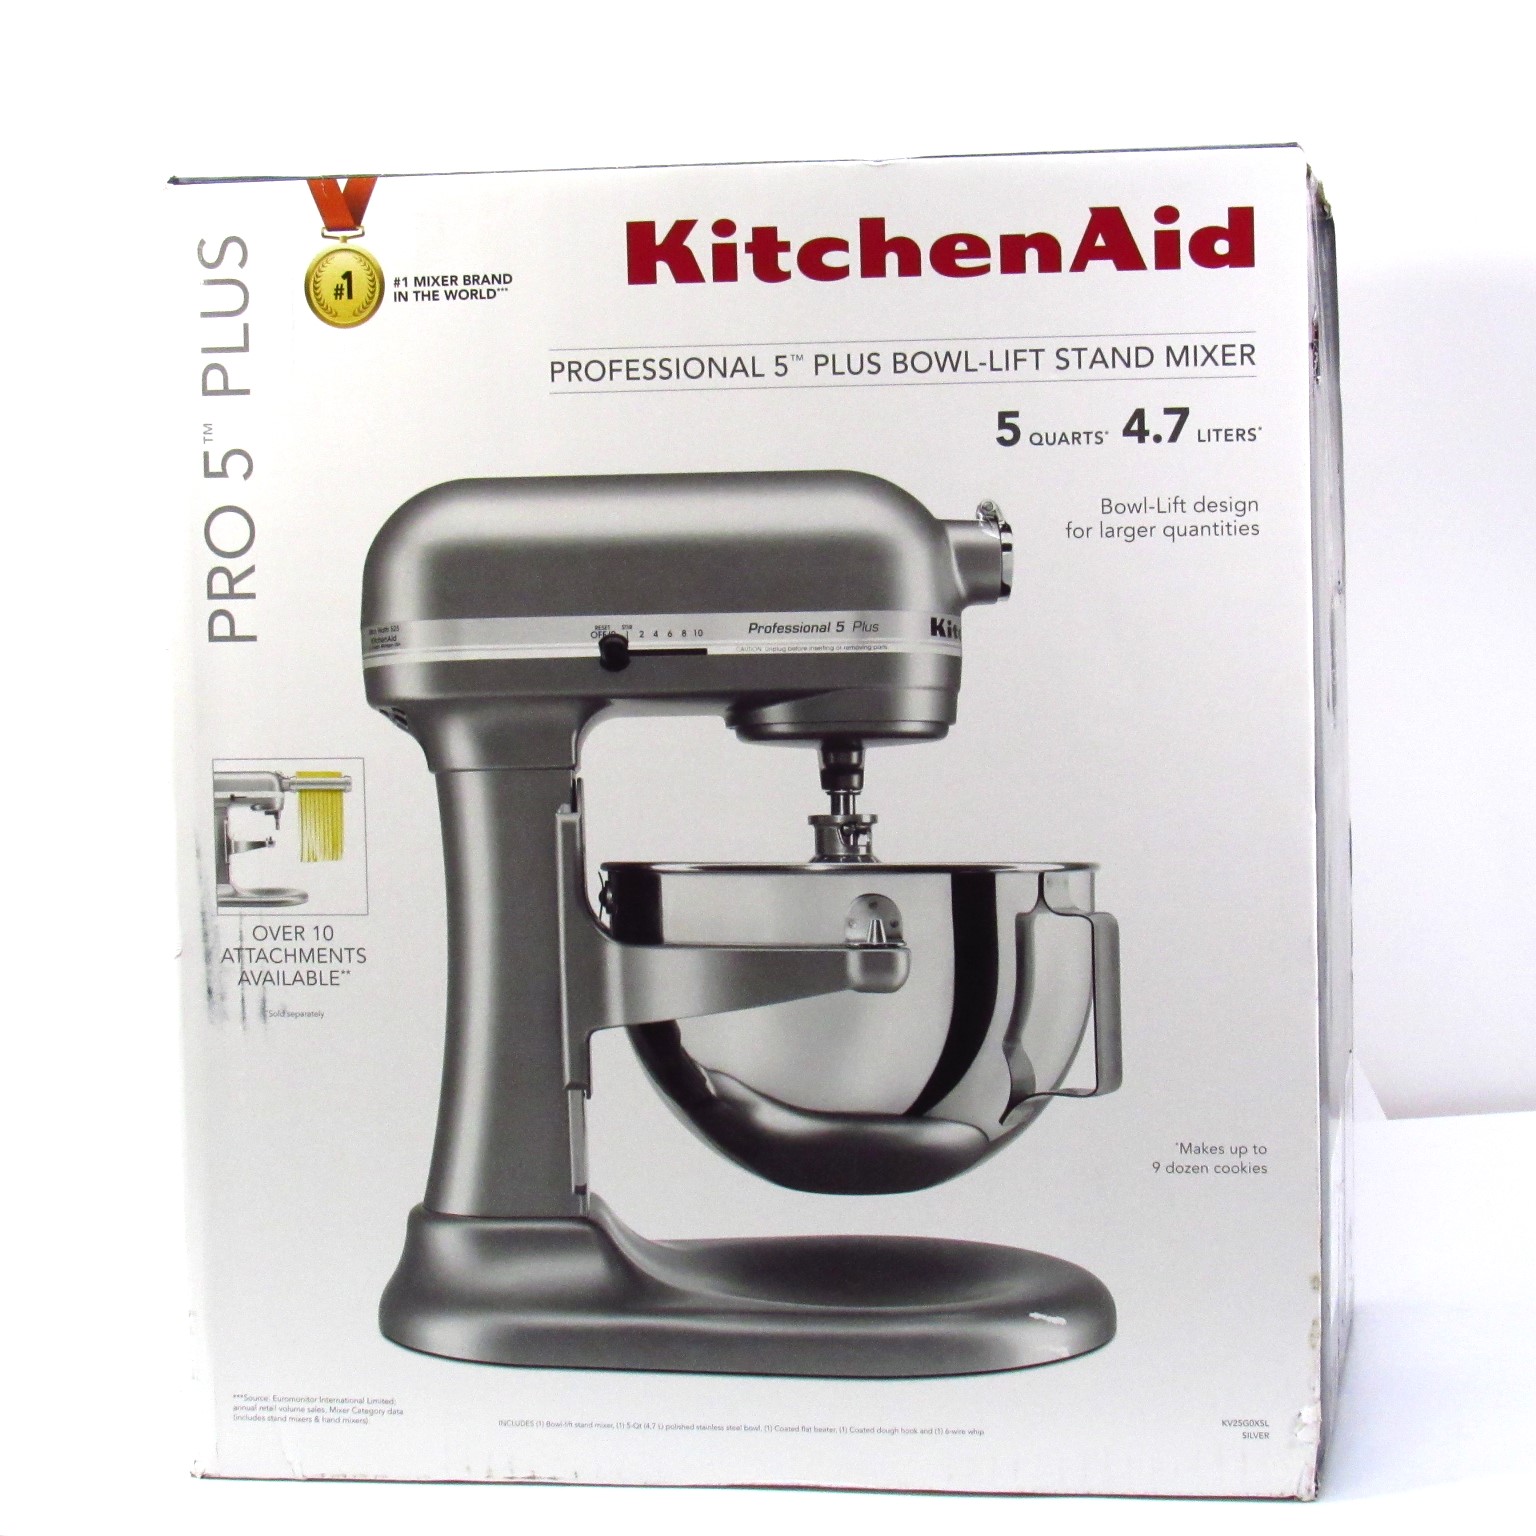 Kitchenaid Professional 5 Plus Series Bowl-Lift Stand Mixer